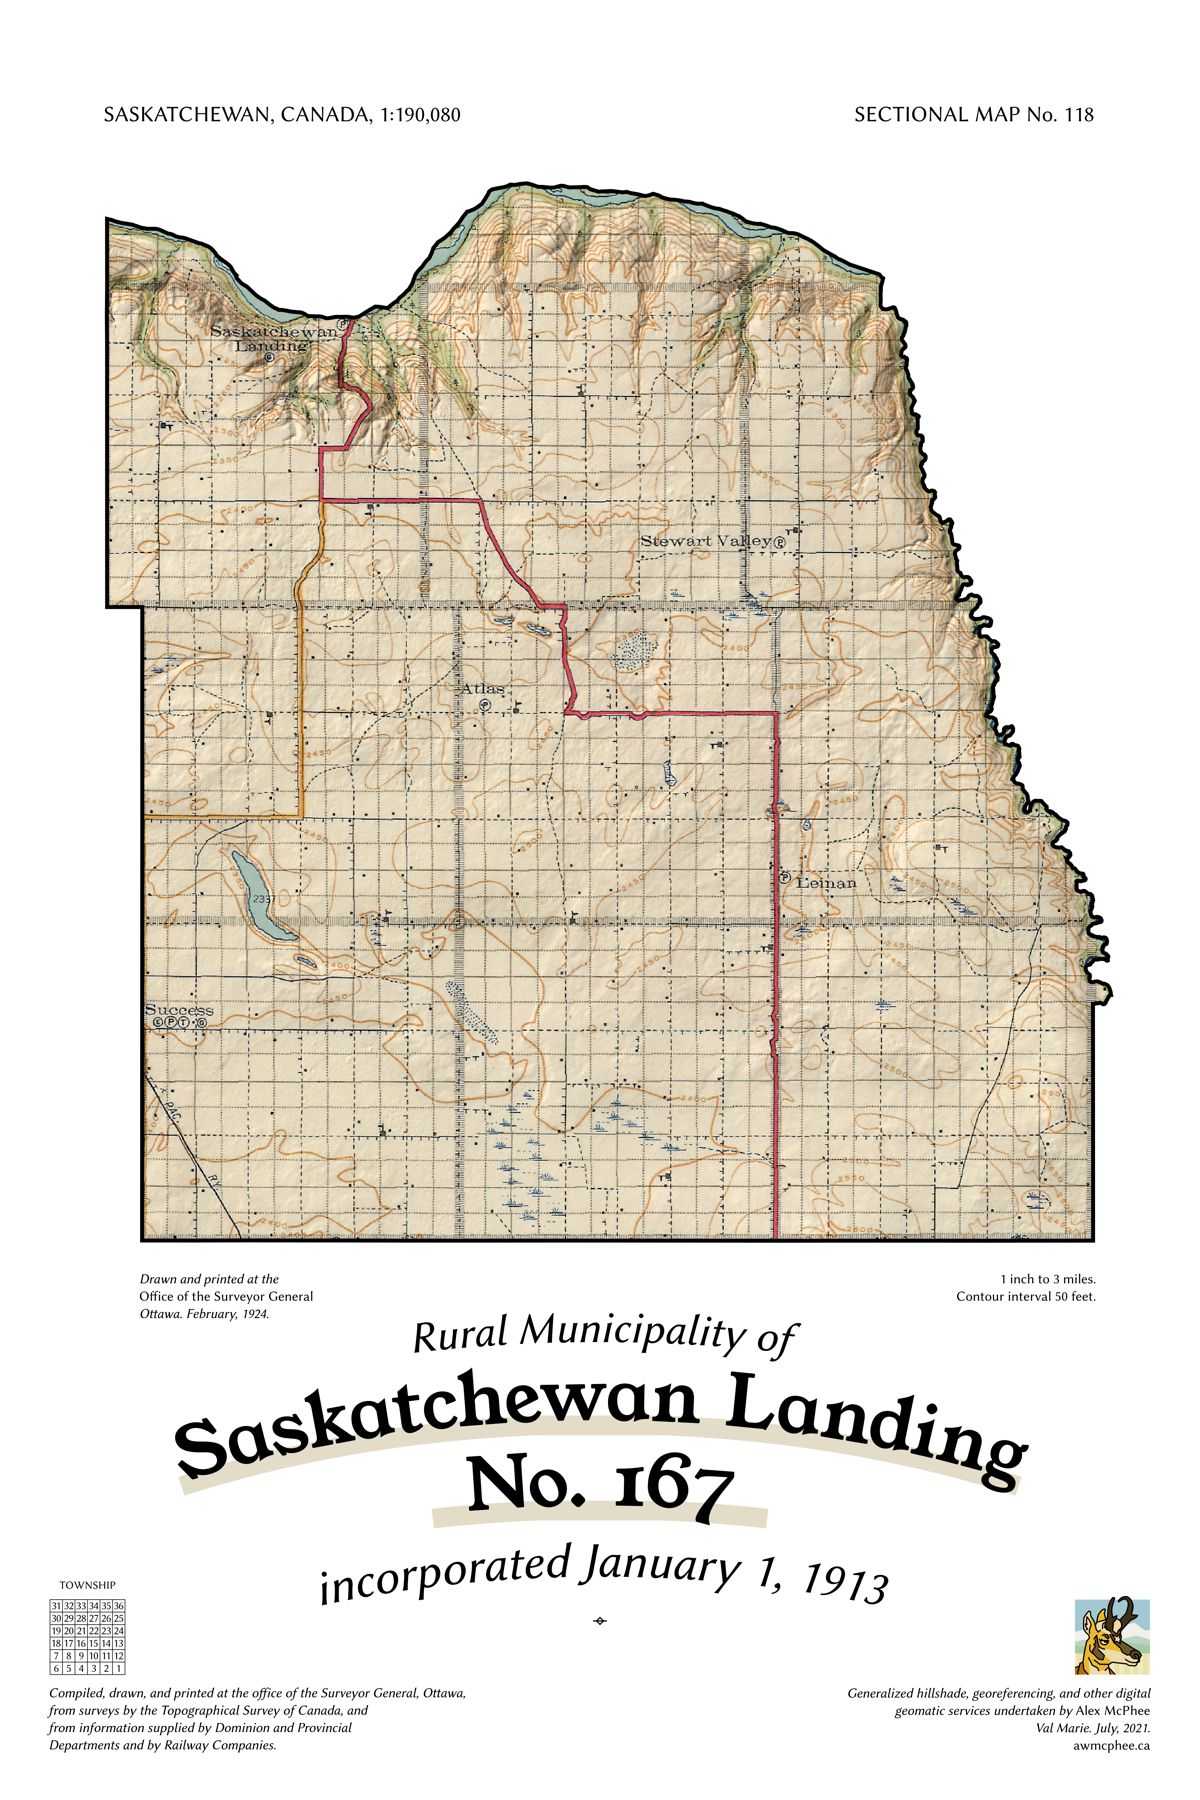 A map of the Rural Municipality of Saskatchewan Landing No. 167.